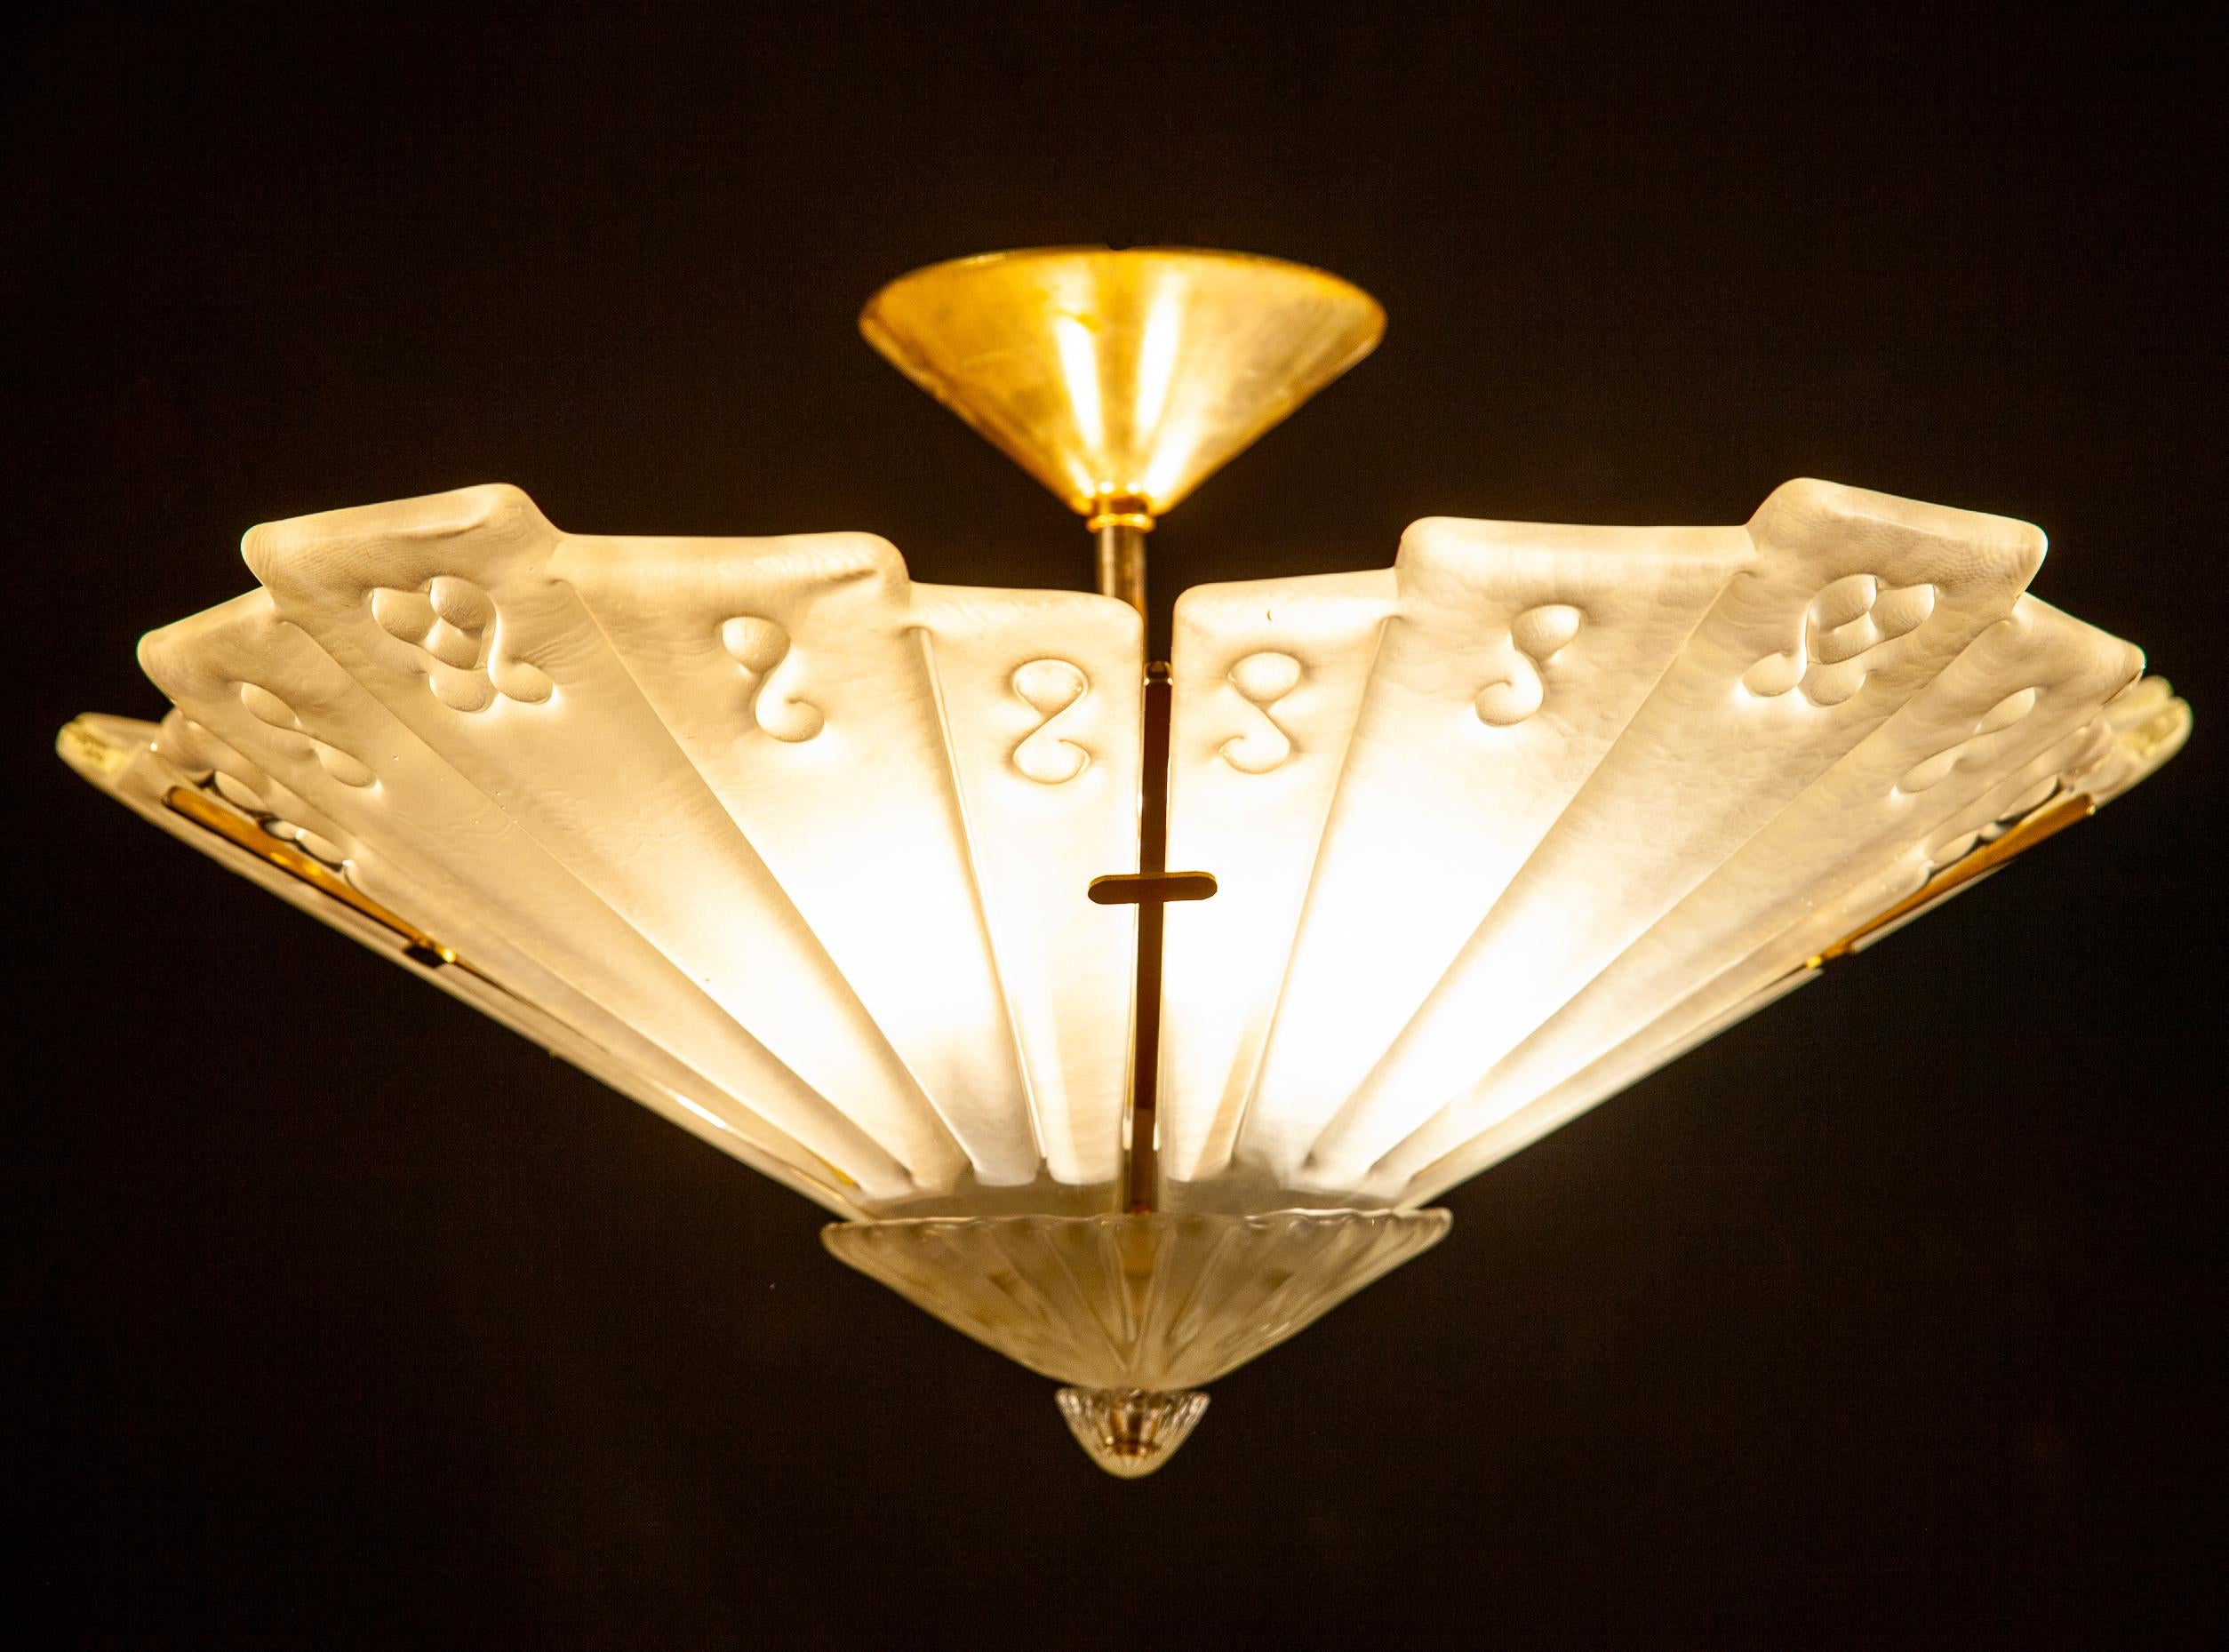 Enchanting Italian Art Deco brass-mounted fan shape opaline glass chandelier or flush mount, 1930-1940.
Excellent vintage condition.